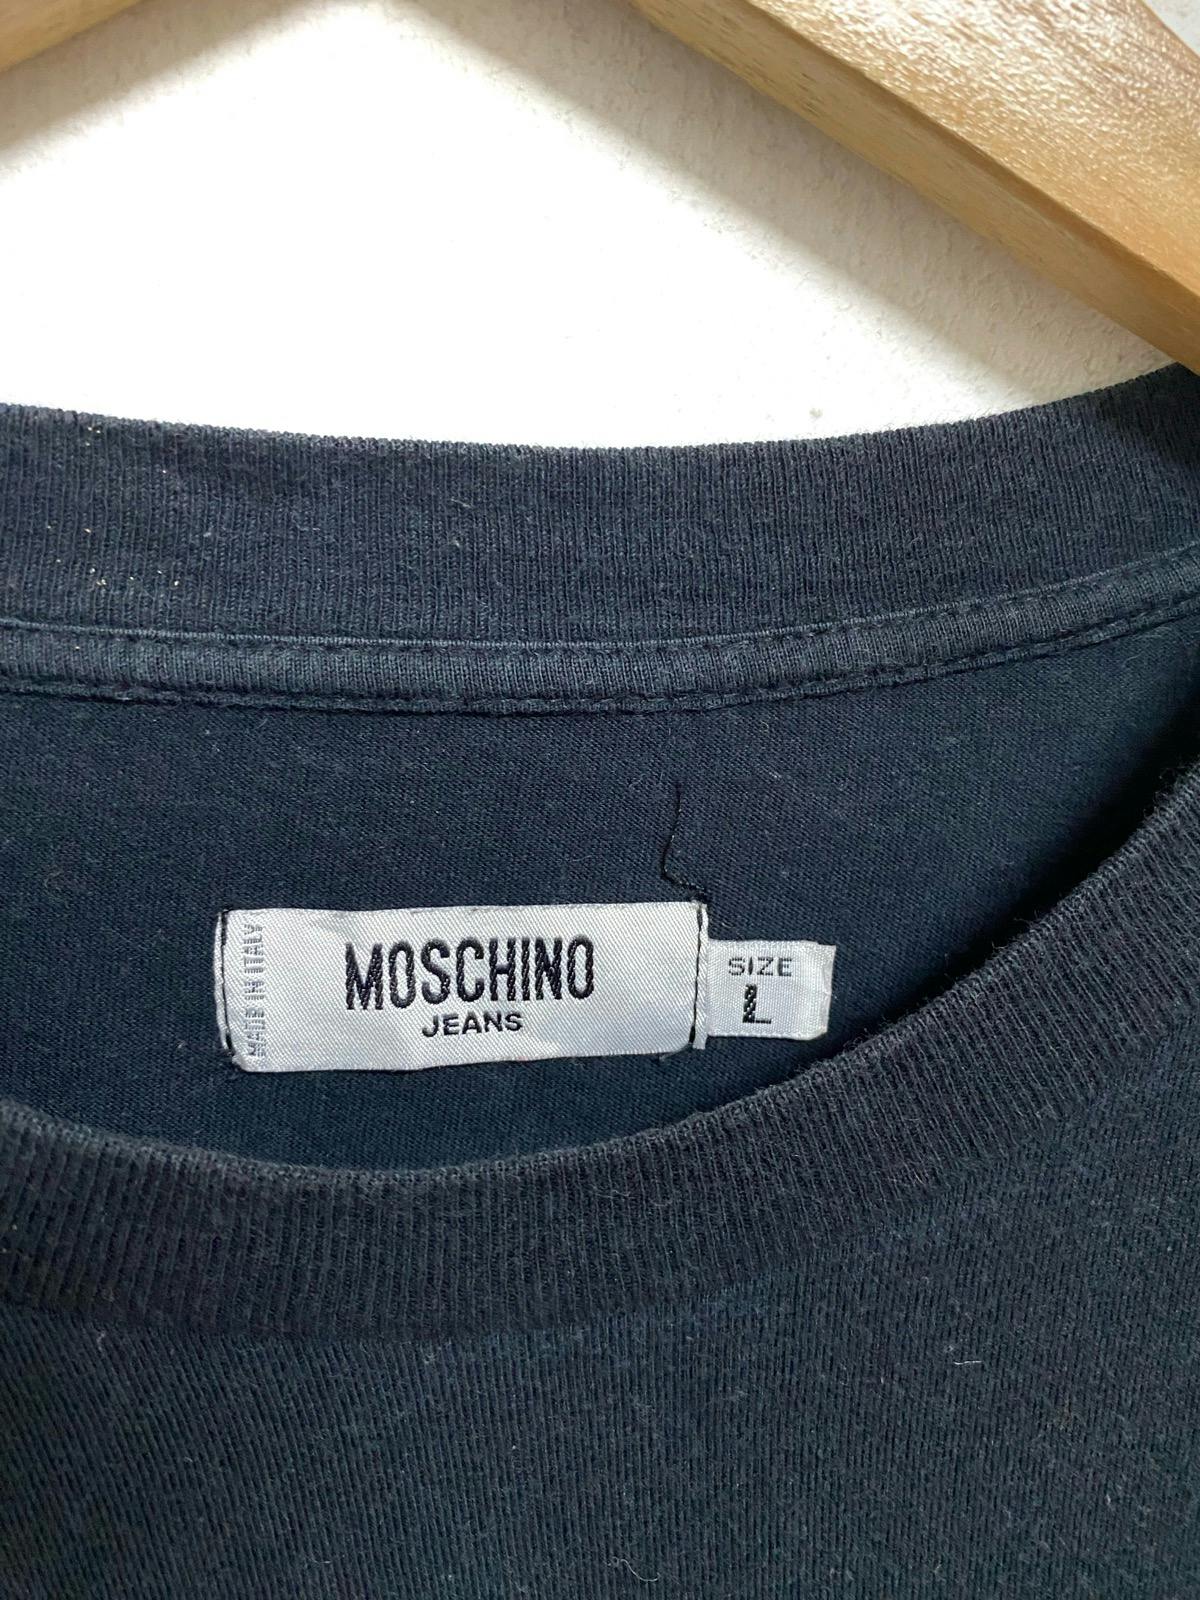 Moschino Viking Yact Club Long Sleeve Tshirt Made in Italy - 6